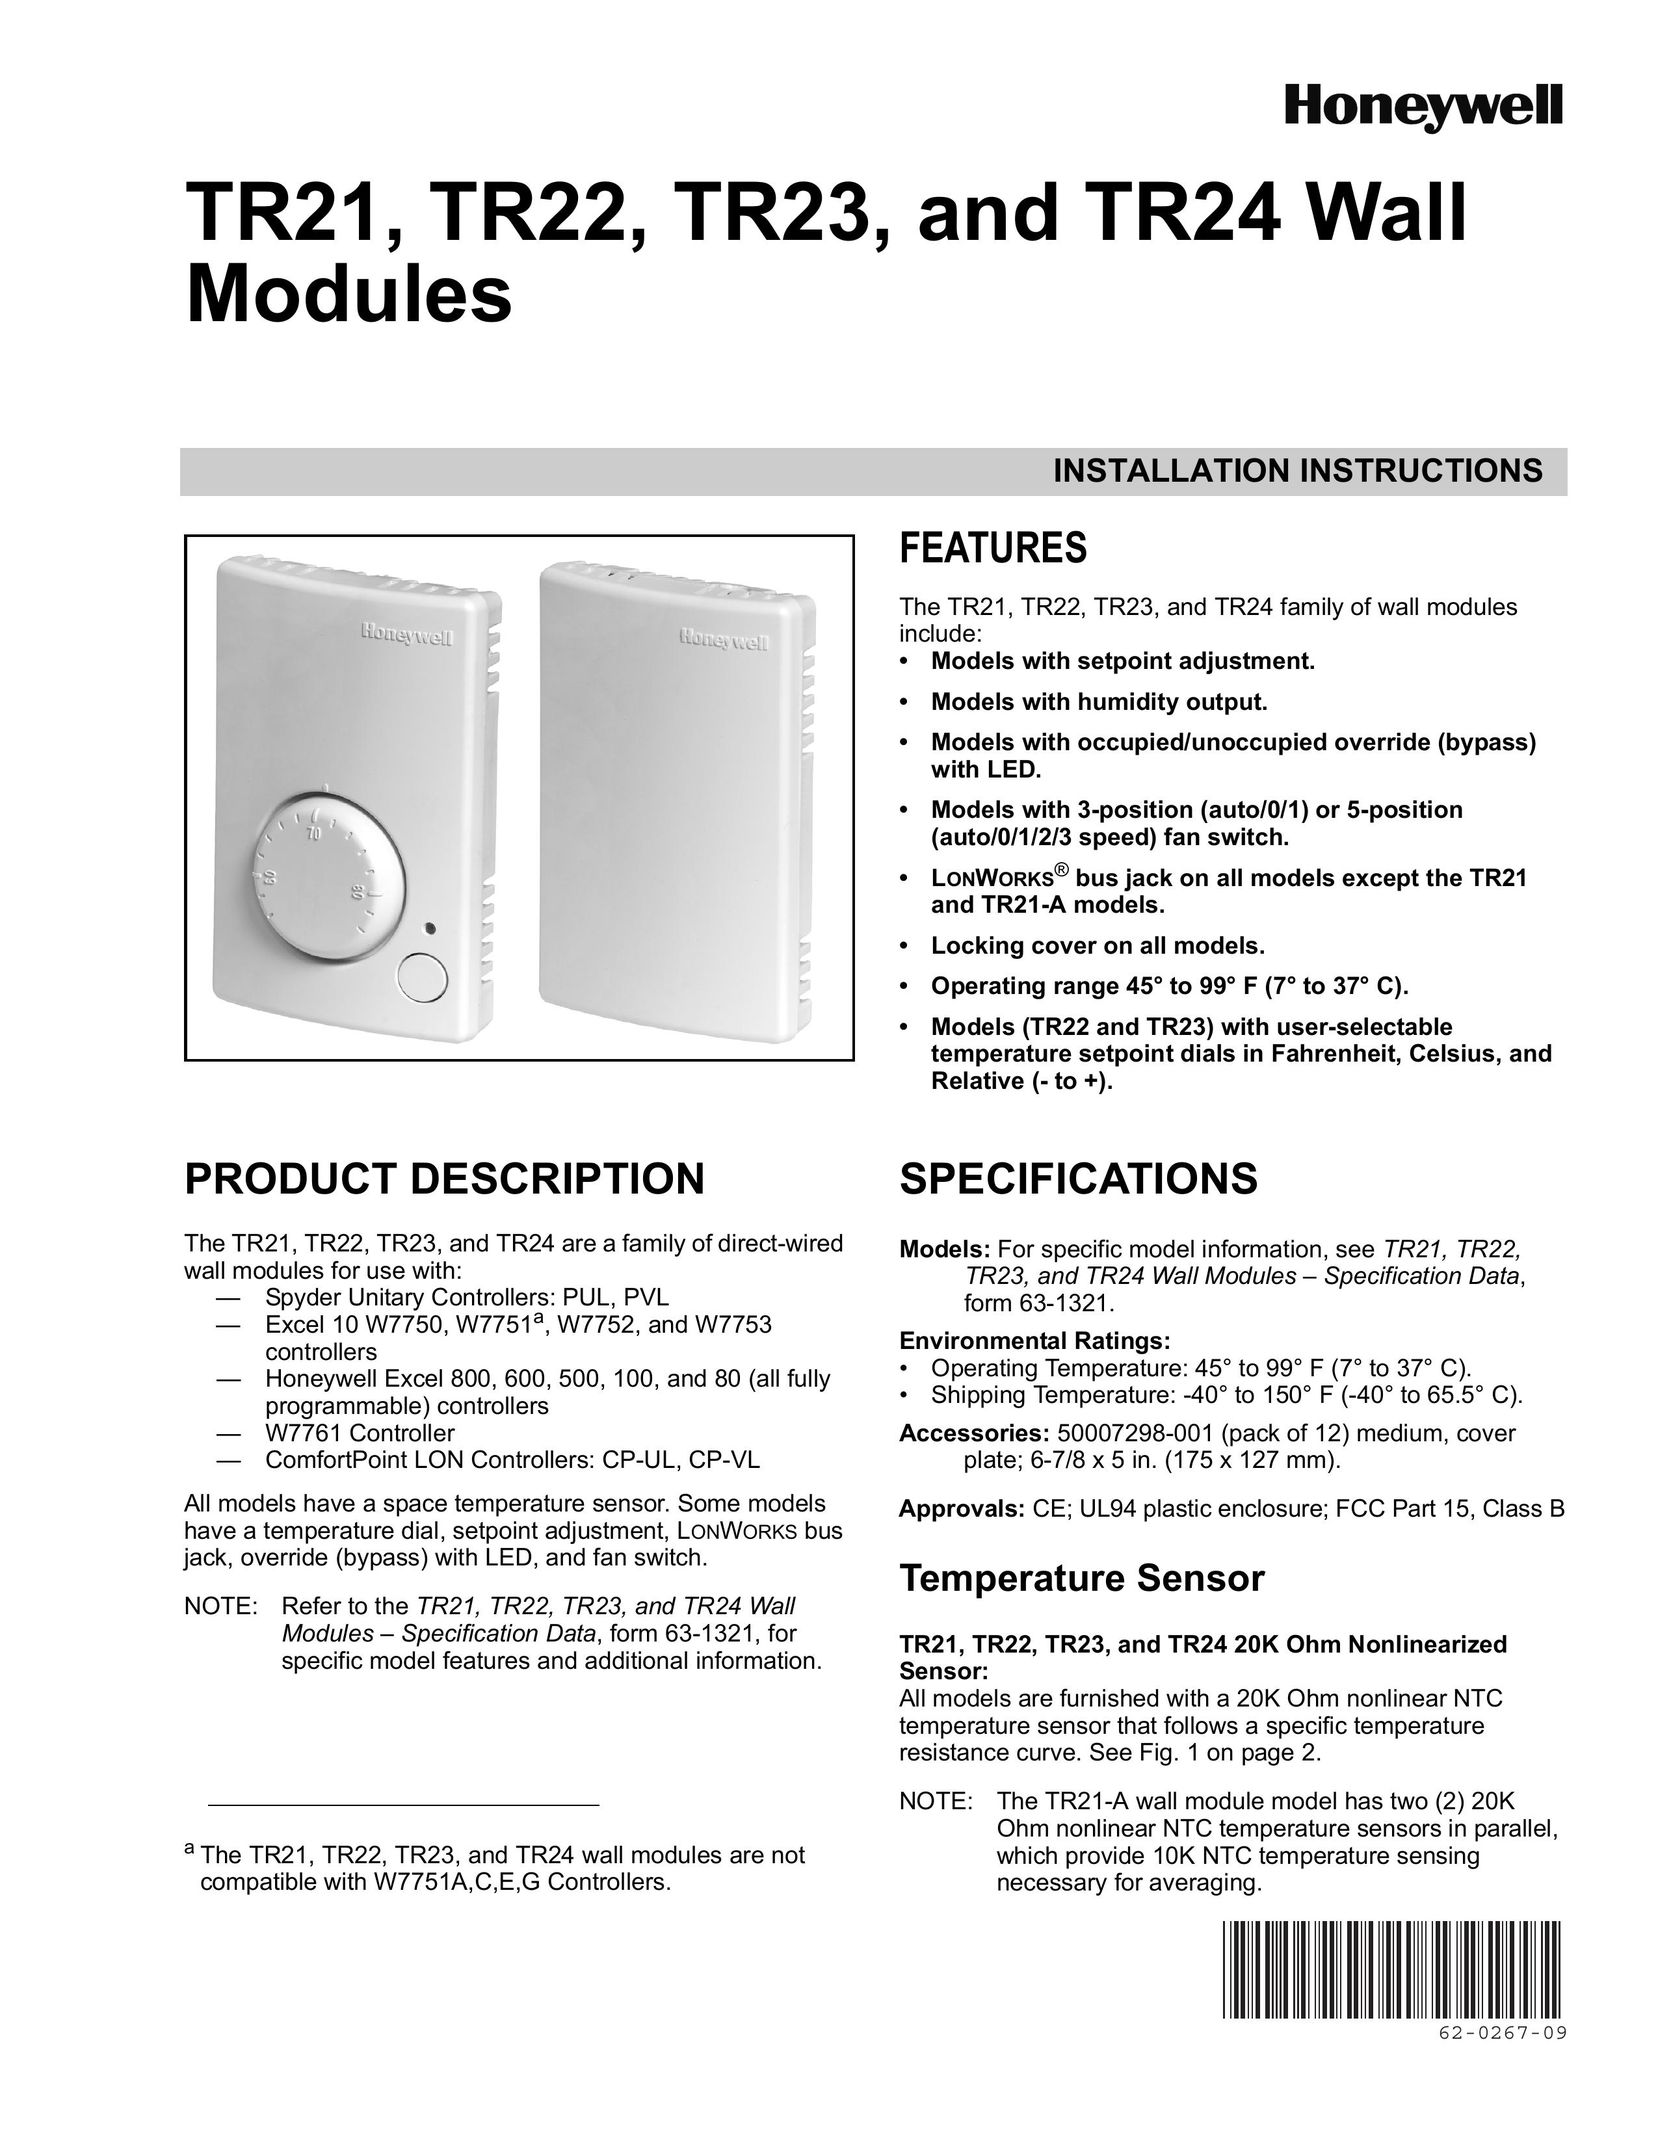 Honeywell TR22 TV Mount User Manual